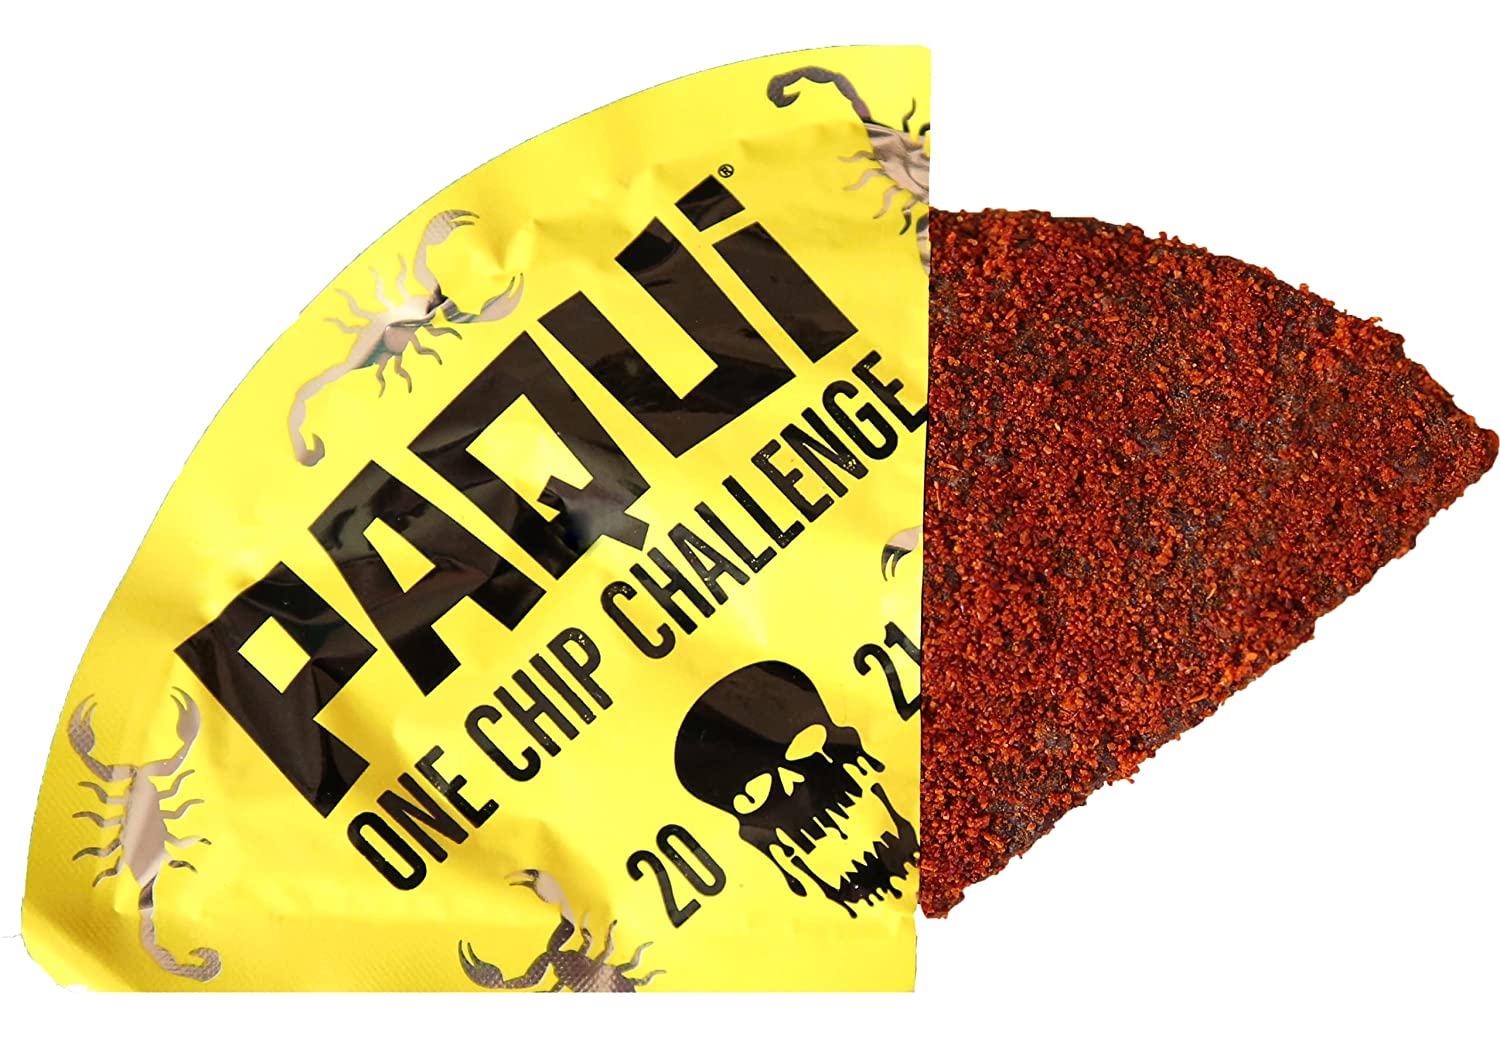 PAQUI 🔥2021 ONE CHIP CHALLENGE 🔥THE CAROLINA REAPER + SCORPION PEPPER - NEW!!!